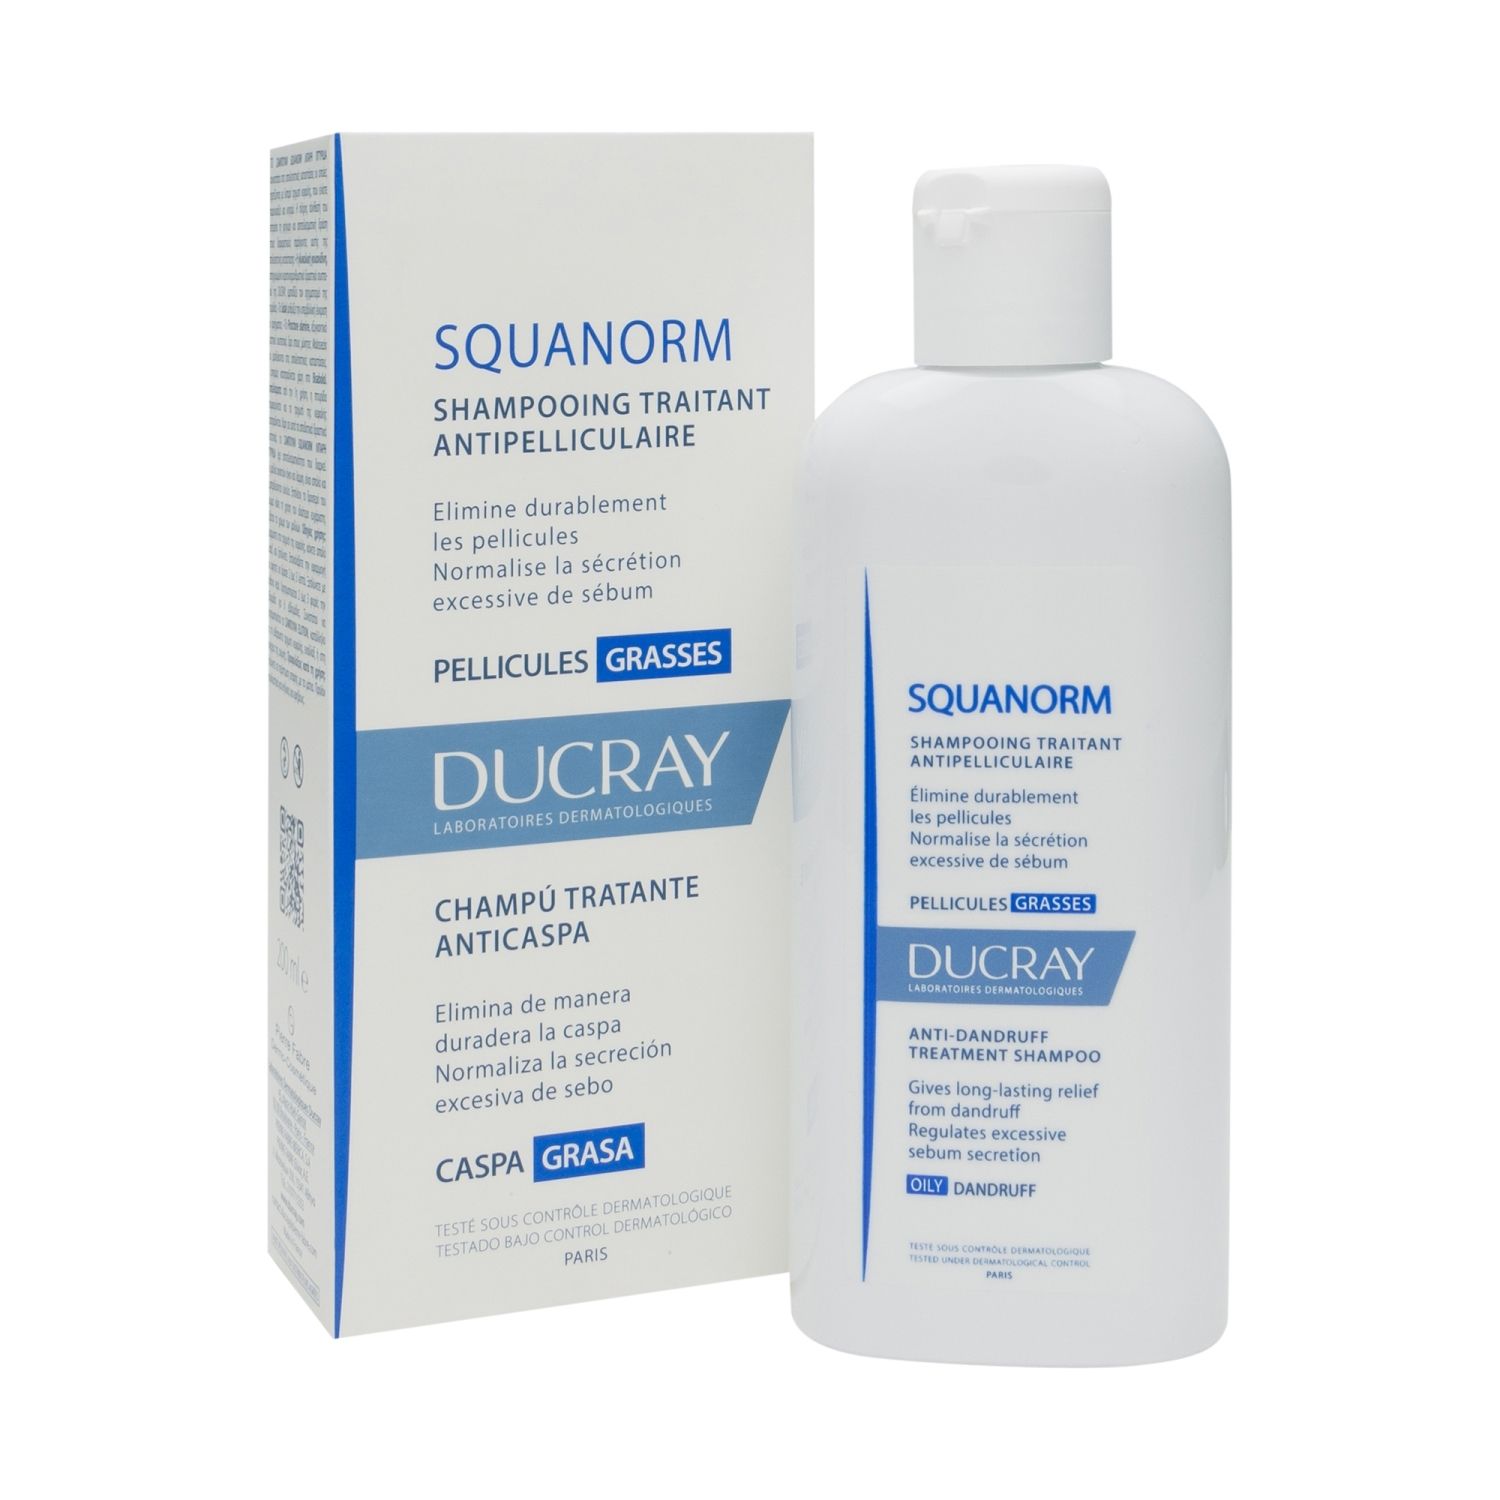 Ducray Squanorm Shampoing Traitant Antipelliculaire Pellicules Grasses Flacon 200ml